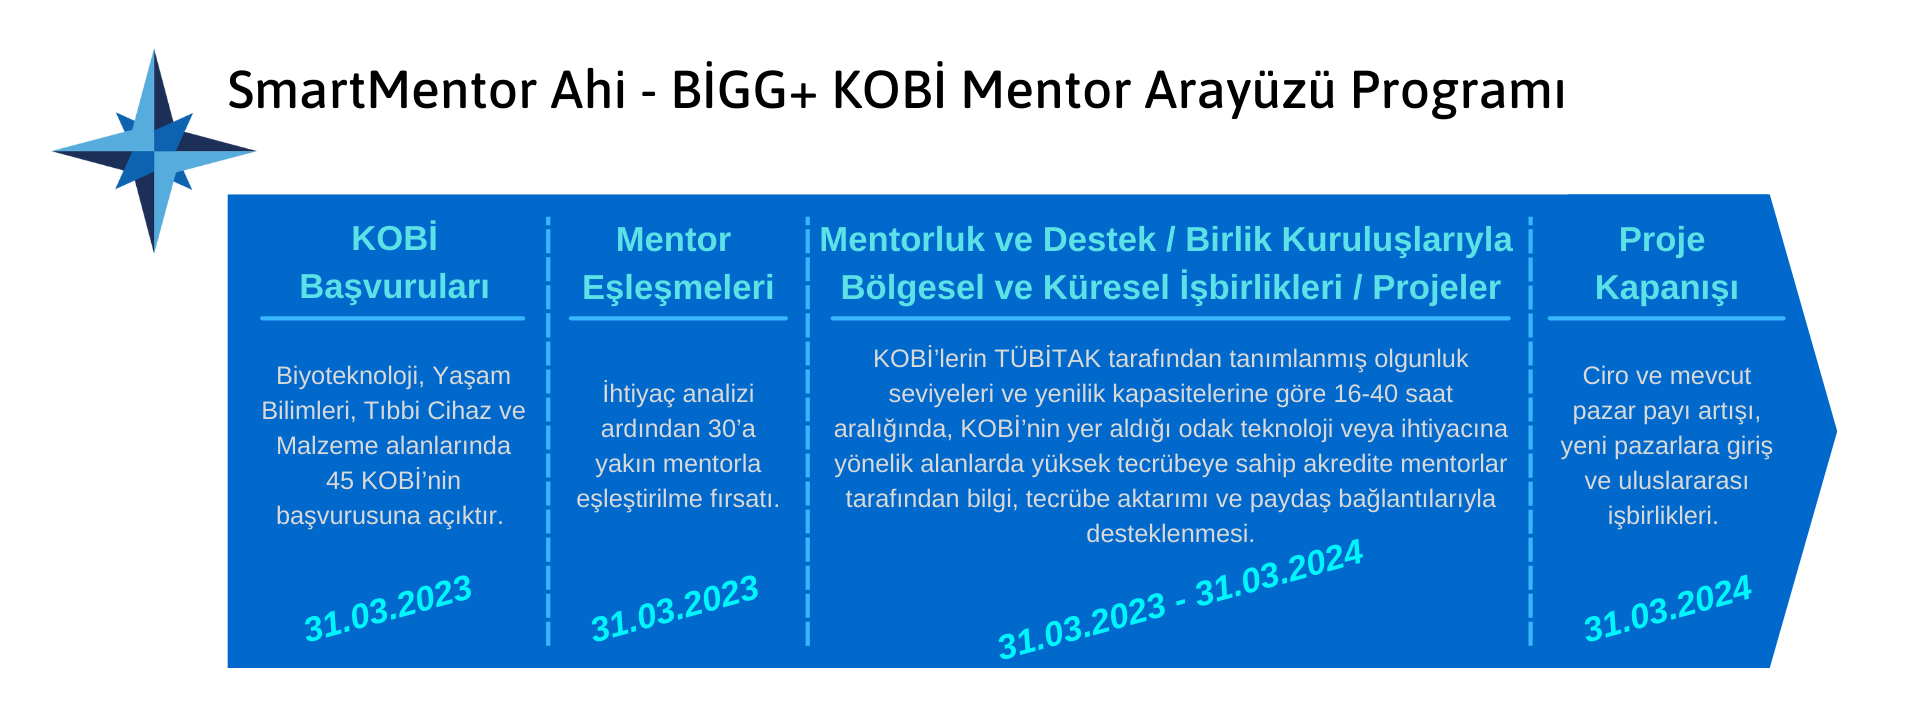 SmartMentor Ahi - BİGG+ KOBİ Mentor Arayüzü Programı